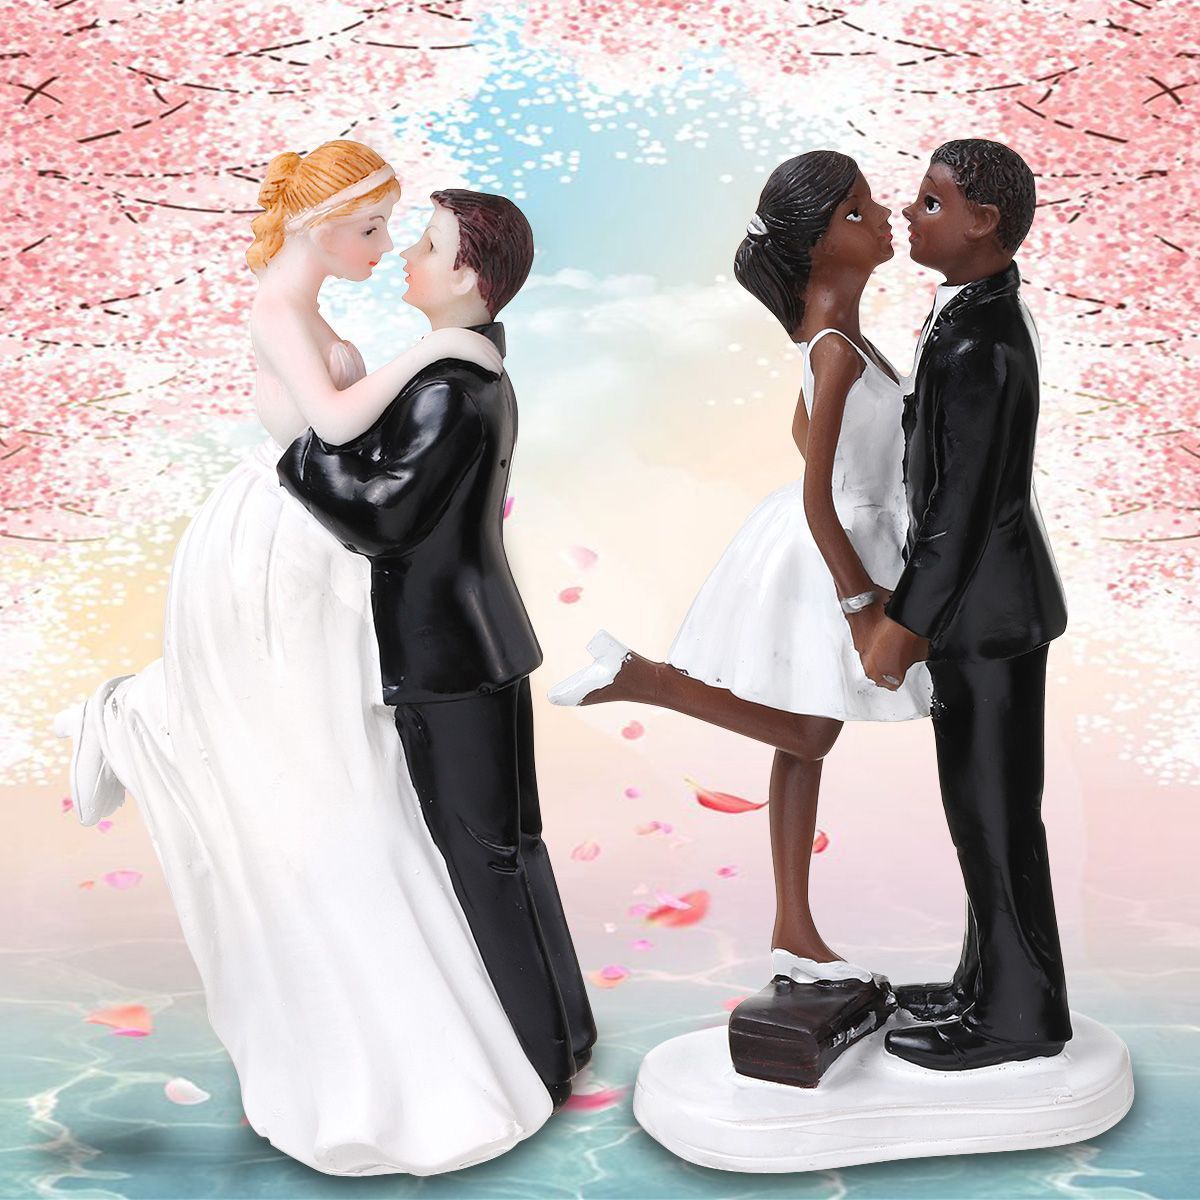 Romantic-Funny-Wedding-Cake-Topper-Figure-Bride-Groom-Couple-Bridal-Decorations-1421525